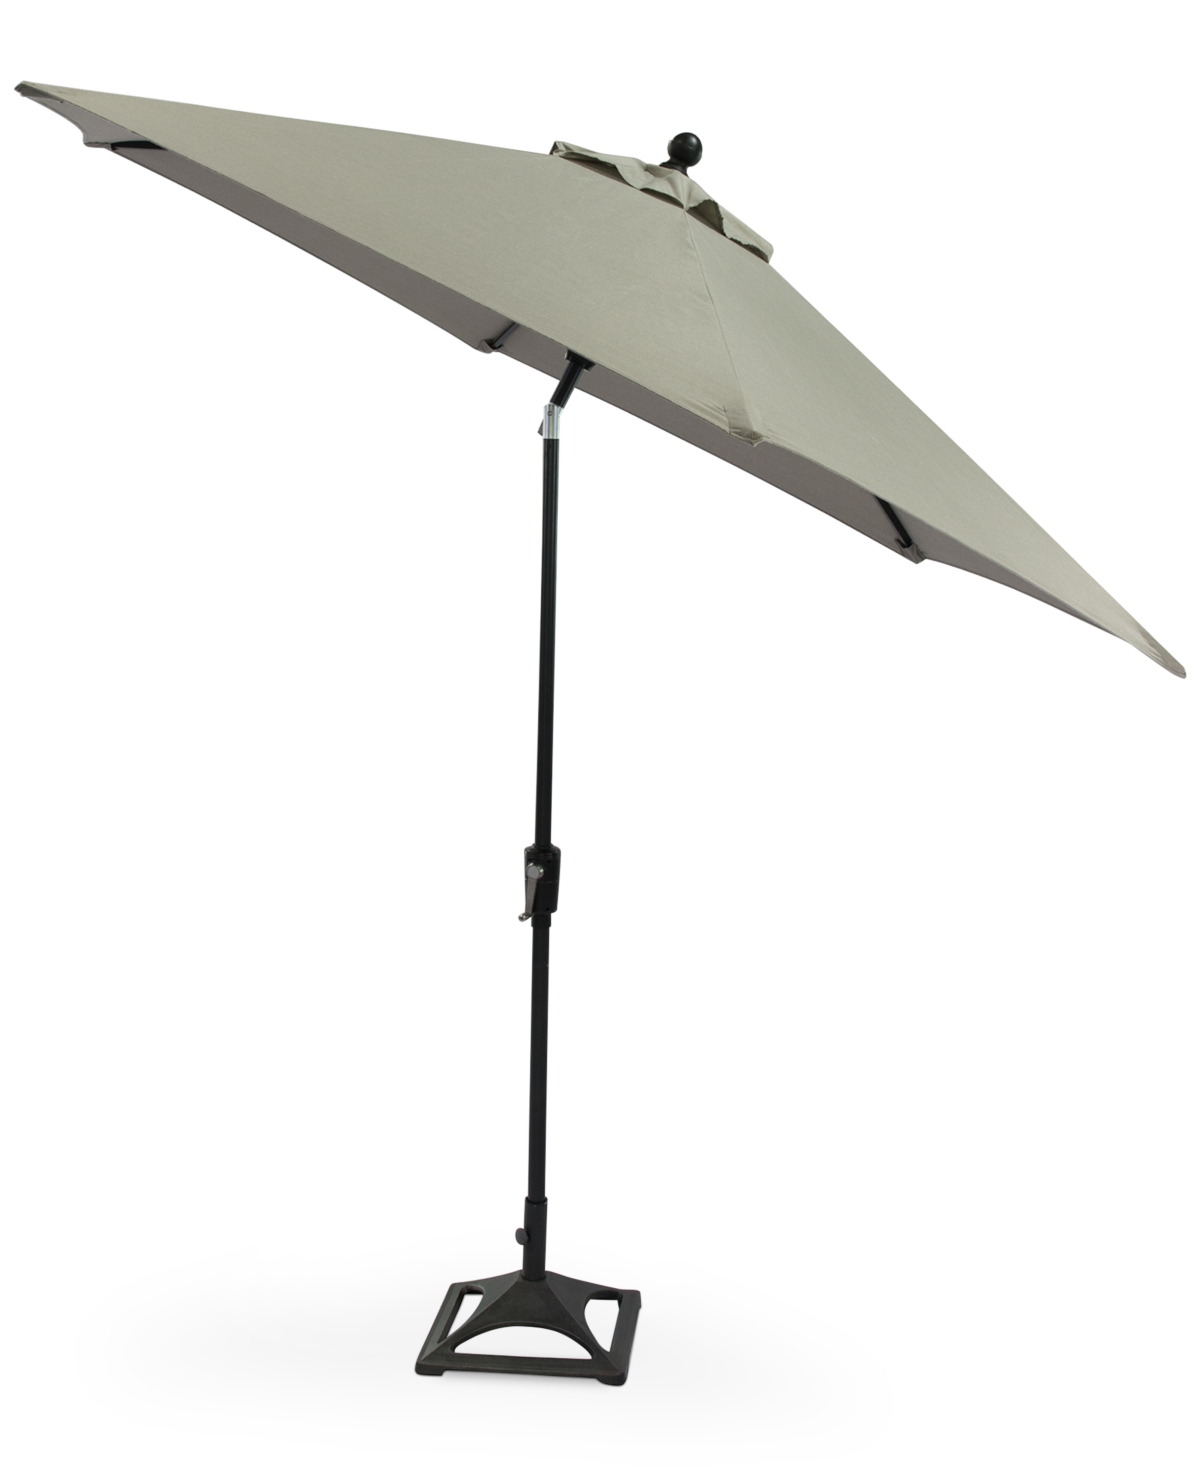 Agio Wayland Outdoor 11' Umbrella And Base With Sunbrella Fabric, Created For Macy's In Sunbrella Spectrum Dove